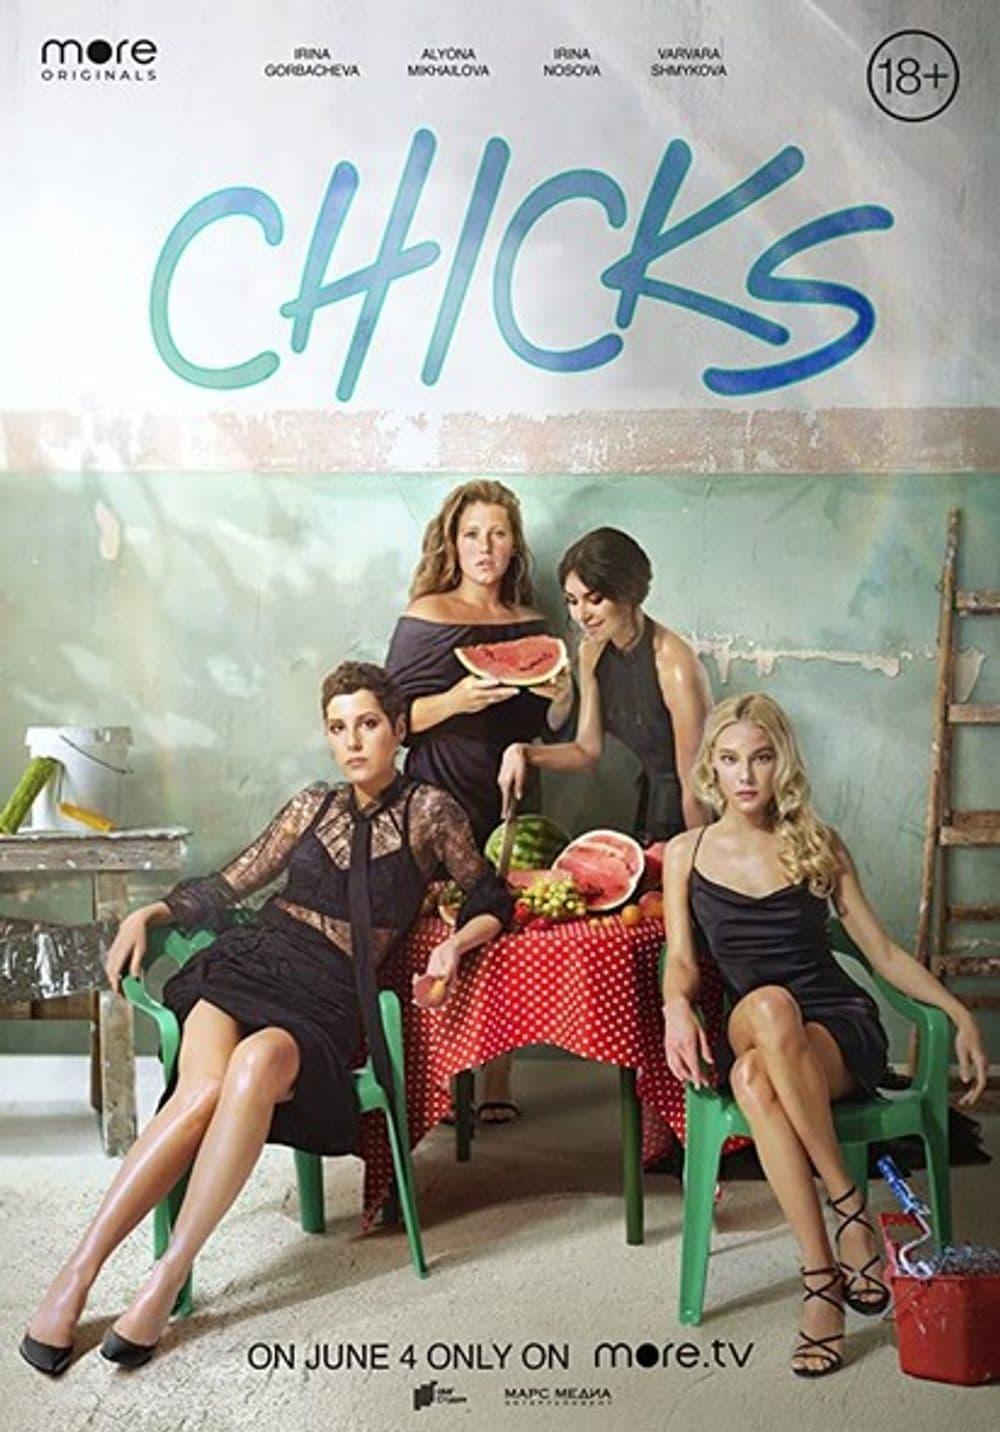 Chicks poster